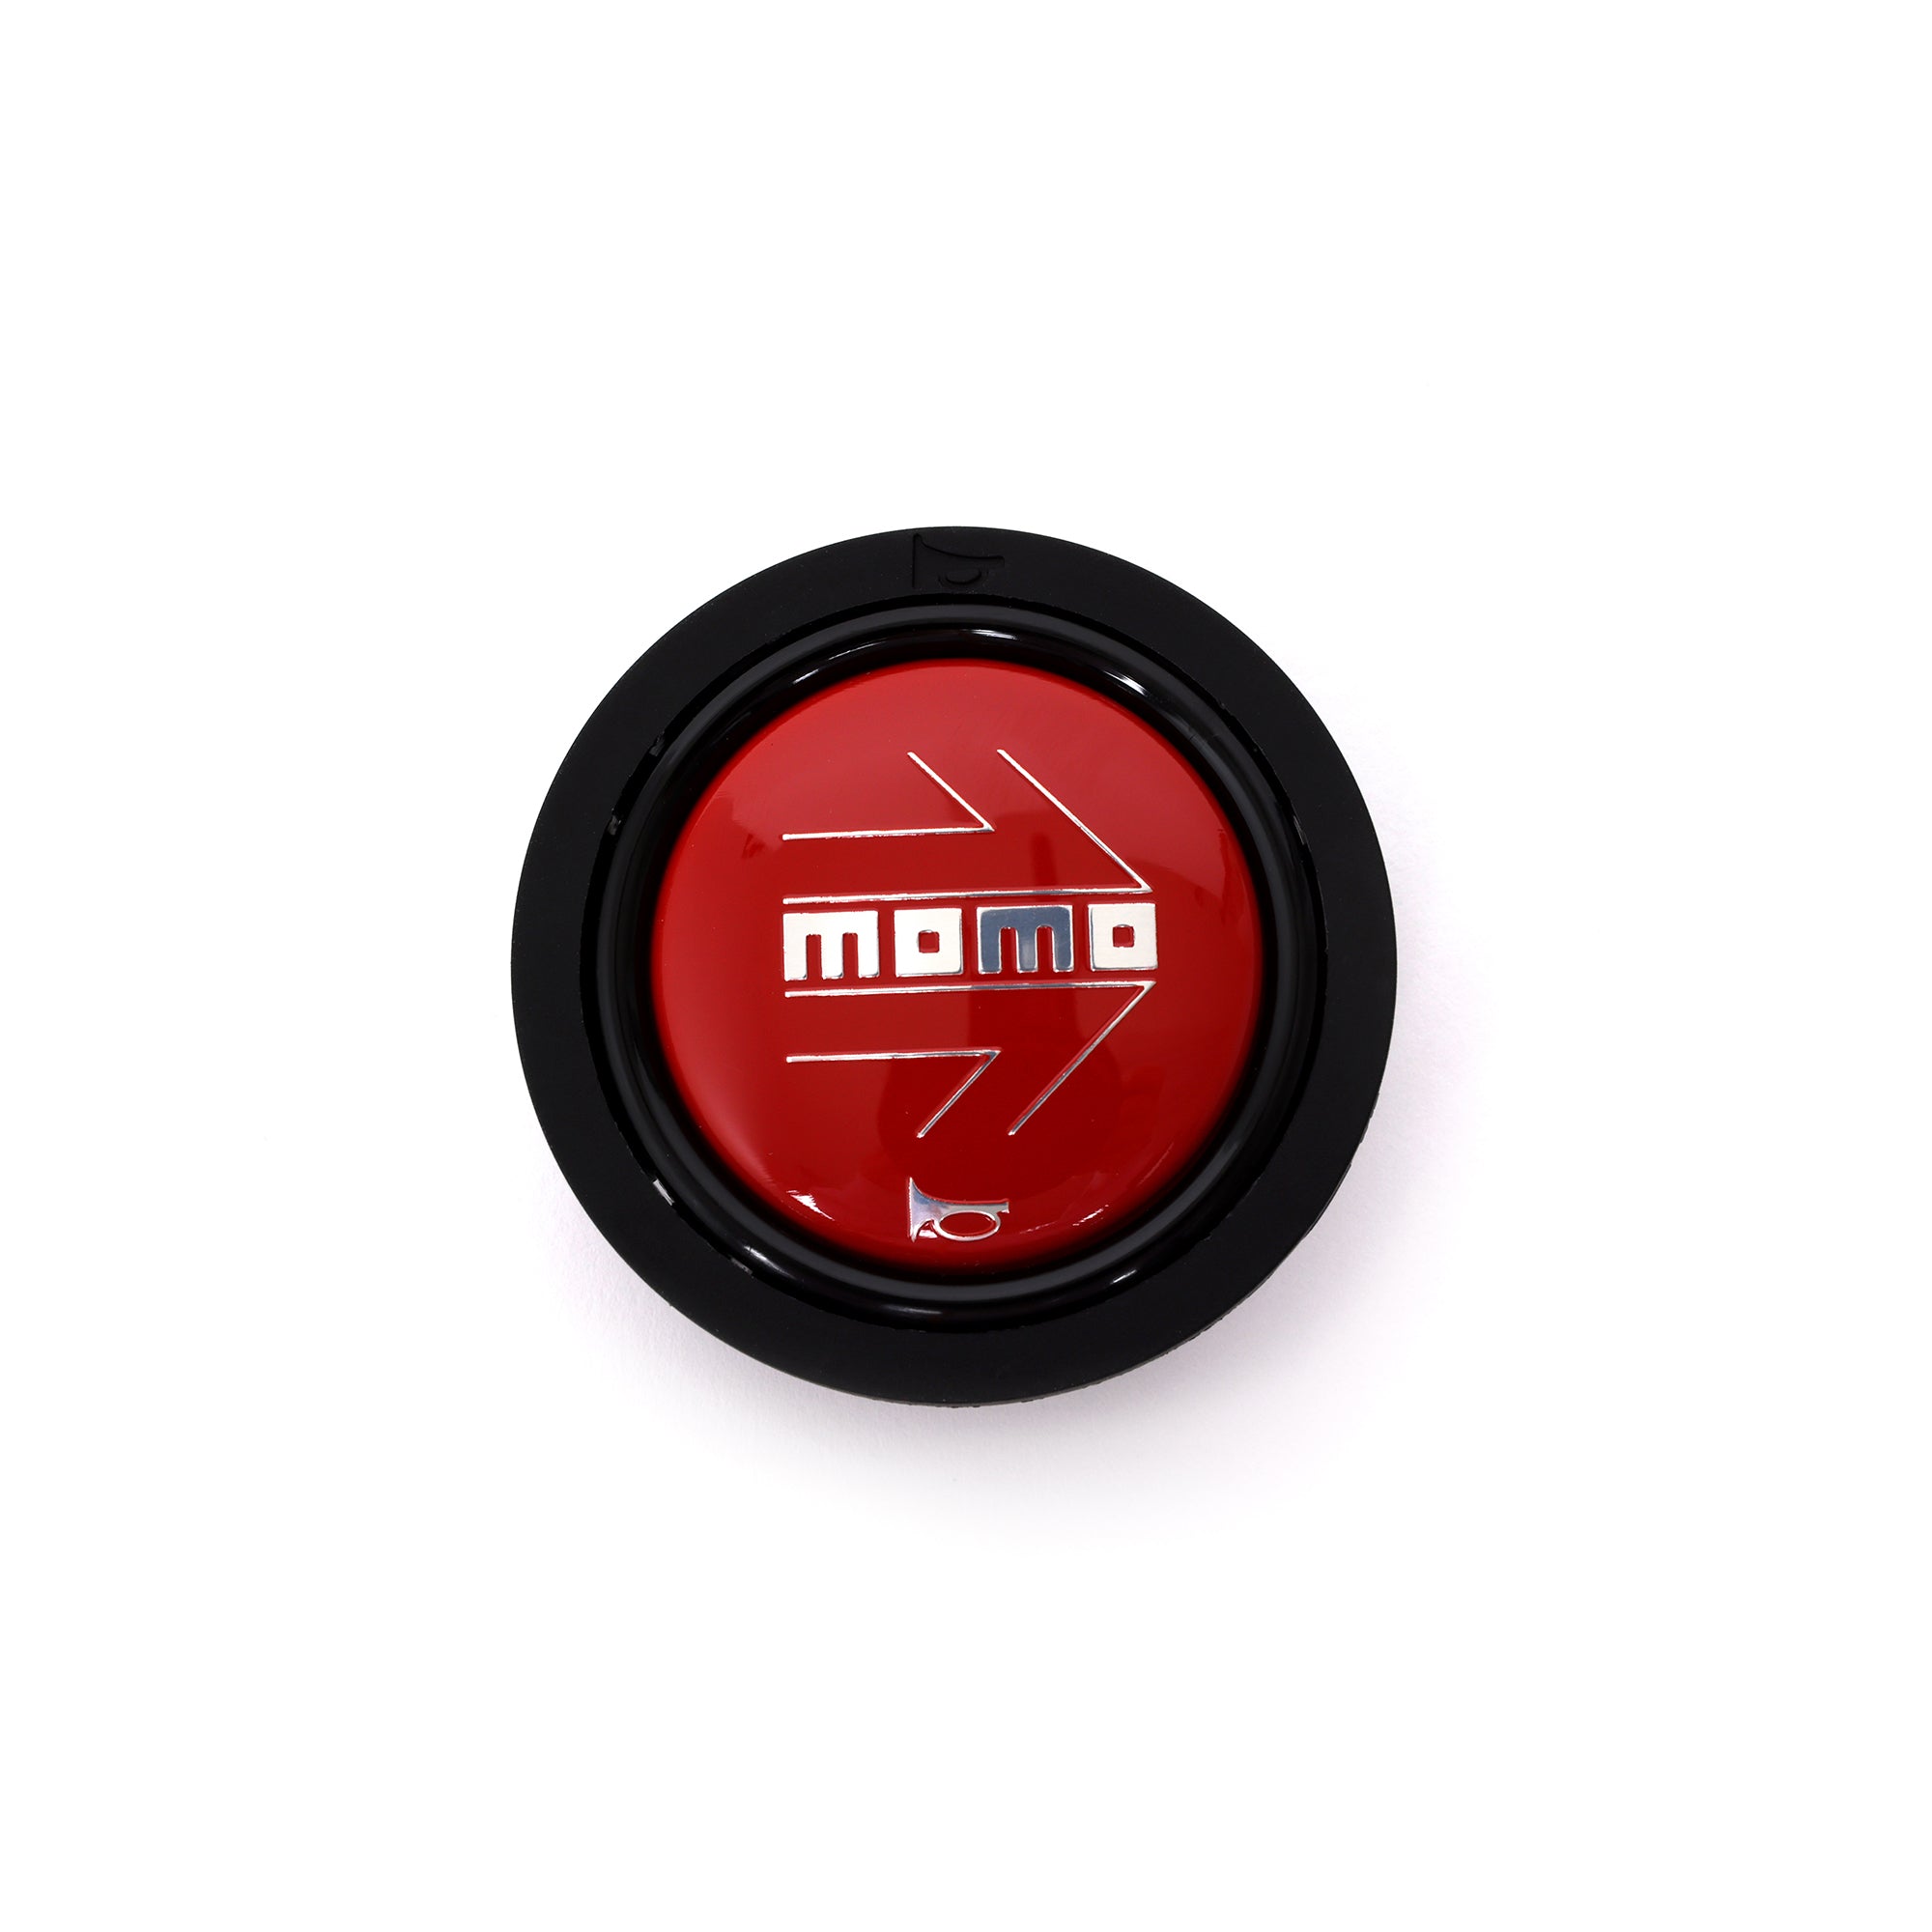 Momo Montecarlo Alcantara Steering Wheel 320 mm - Black/Red Stitch/Black Spokes MOM-MCL-32AL3B